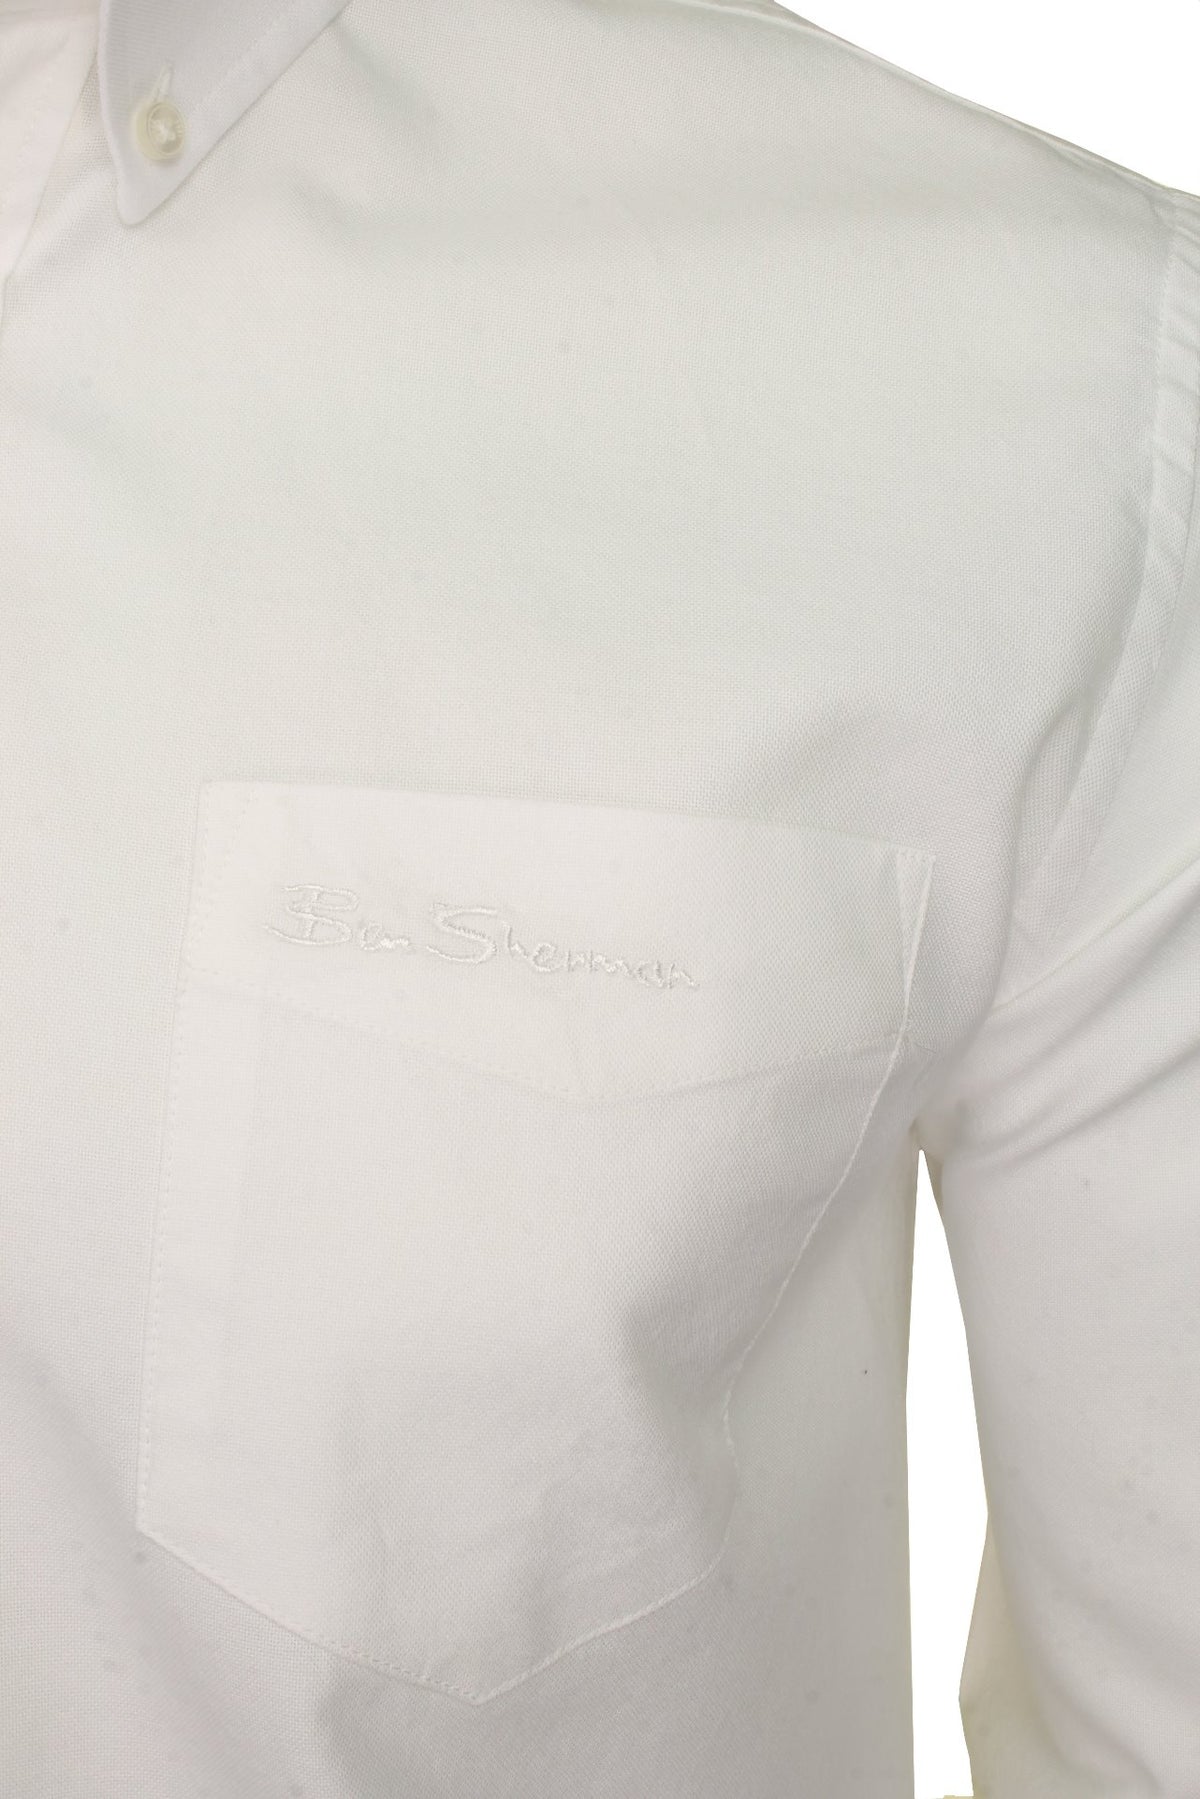 #group_white-(embroidered-pocket-logo)